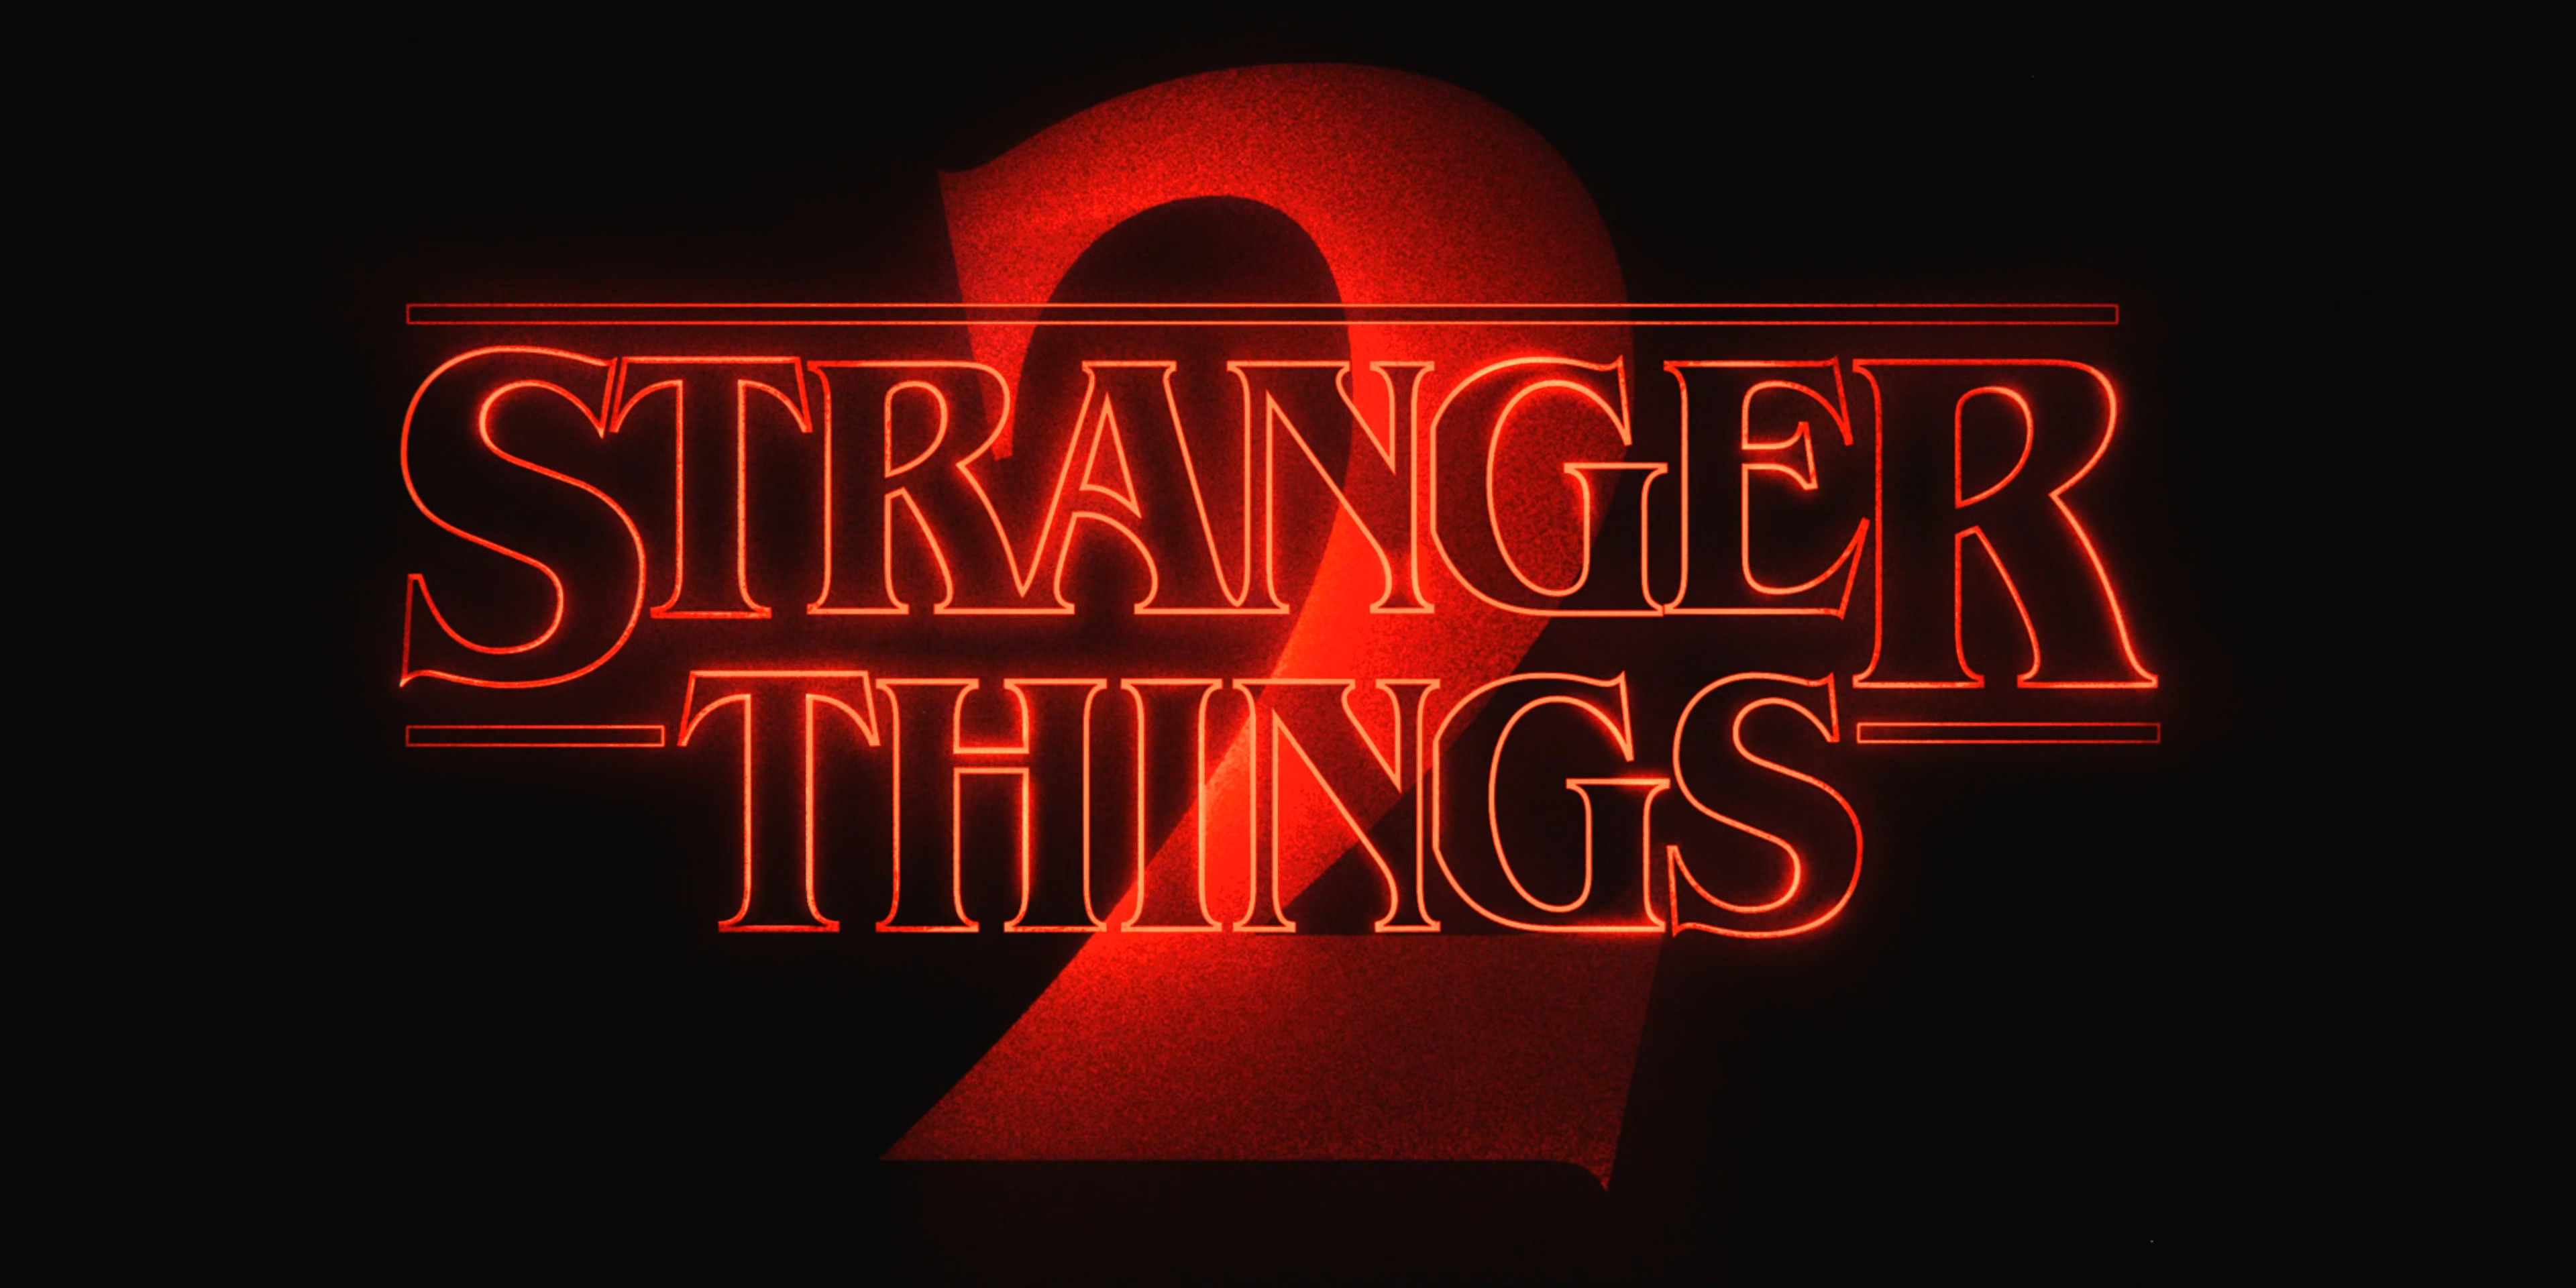 Actriz de Stranger Things criticó fuertemente a Hollywood por su